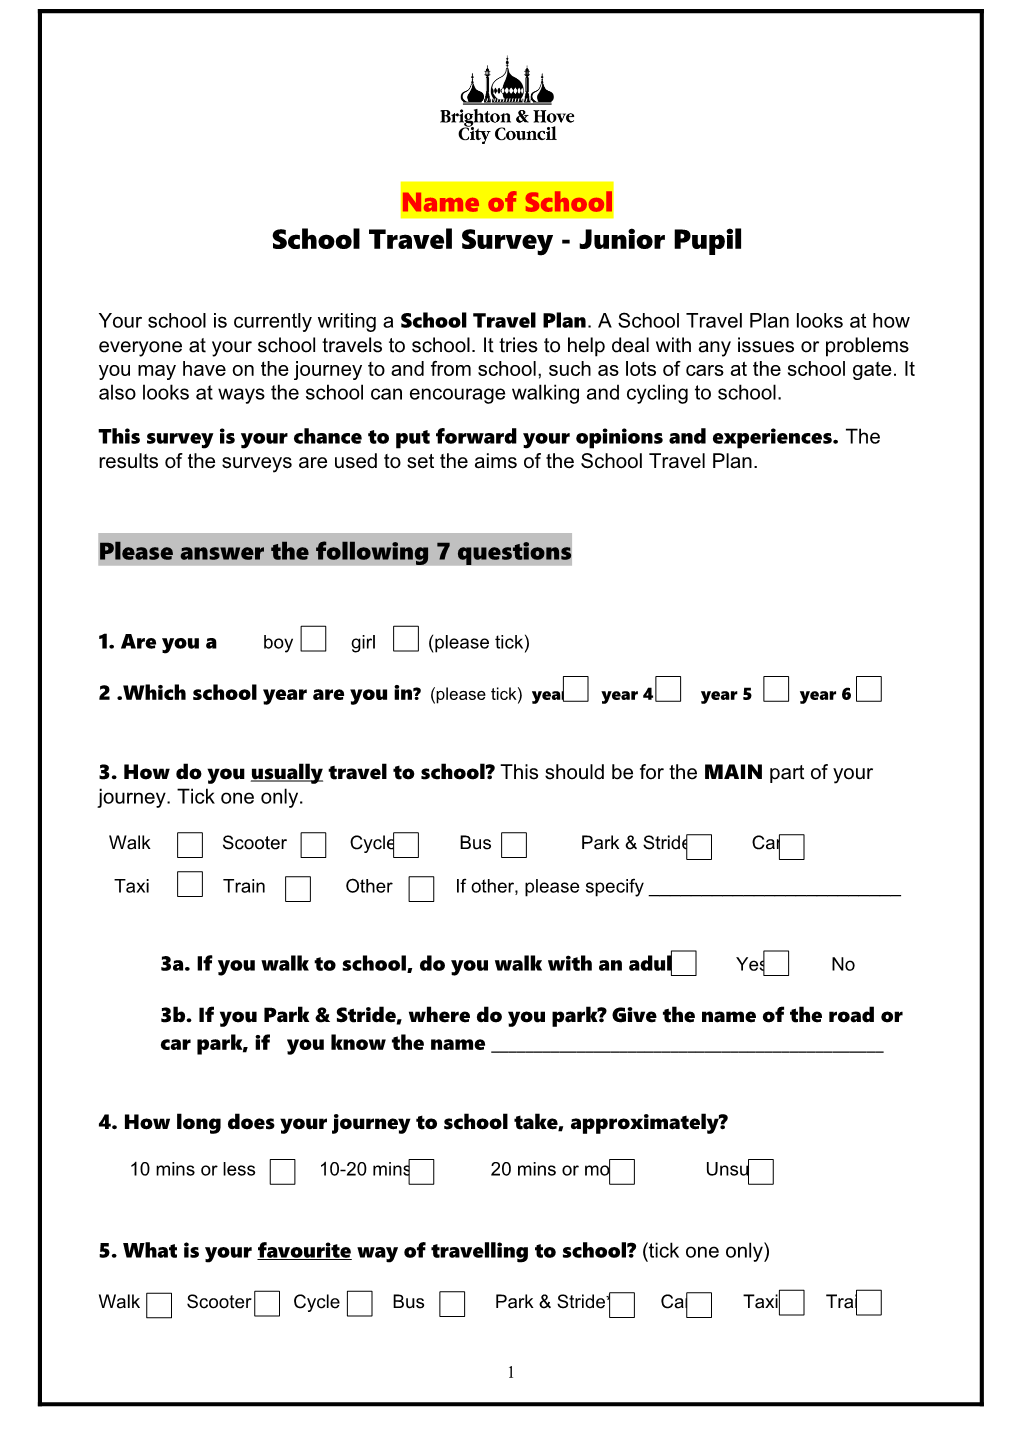 School Travel Plan Questionnaire